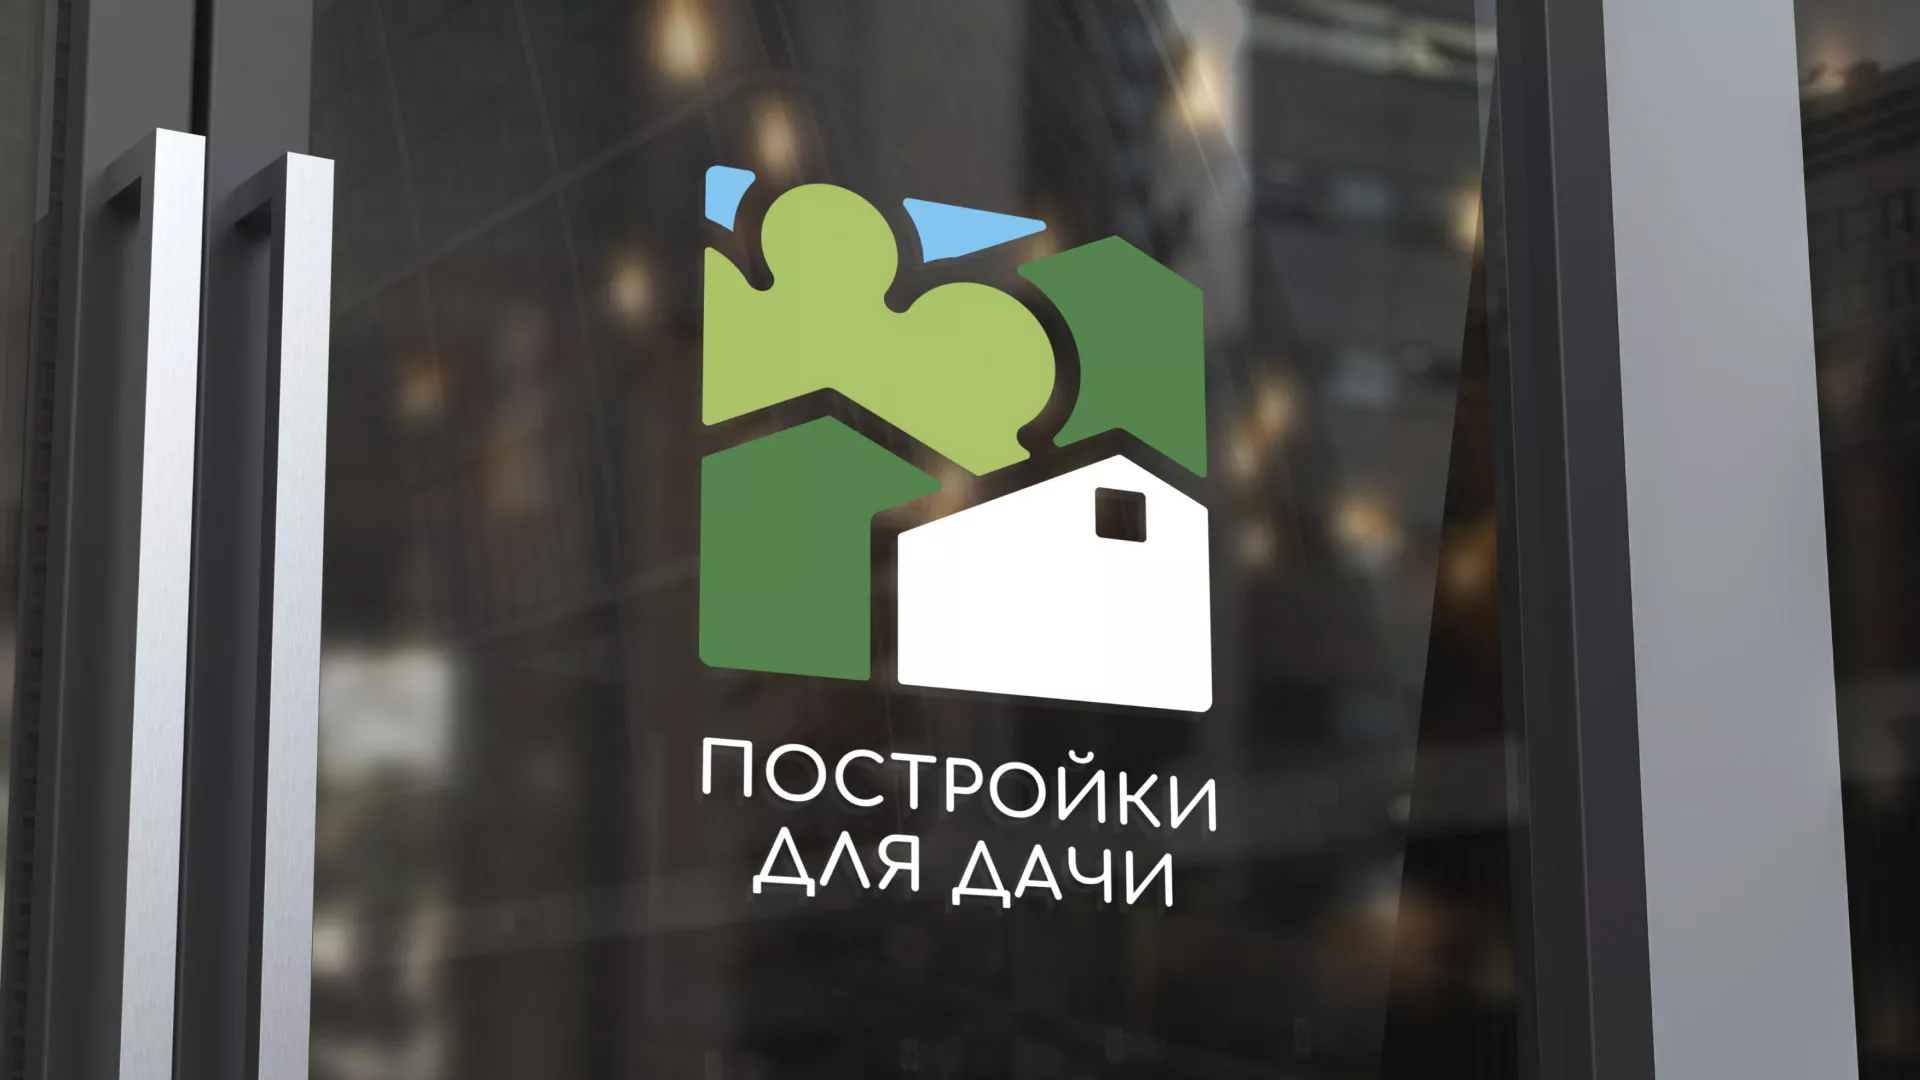 Разработка логотипа в Любиме для компании «Постройки для дачи»